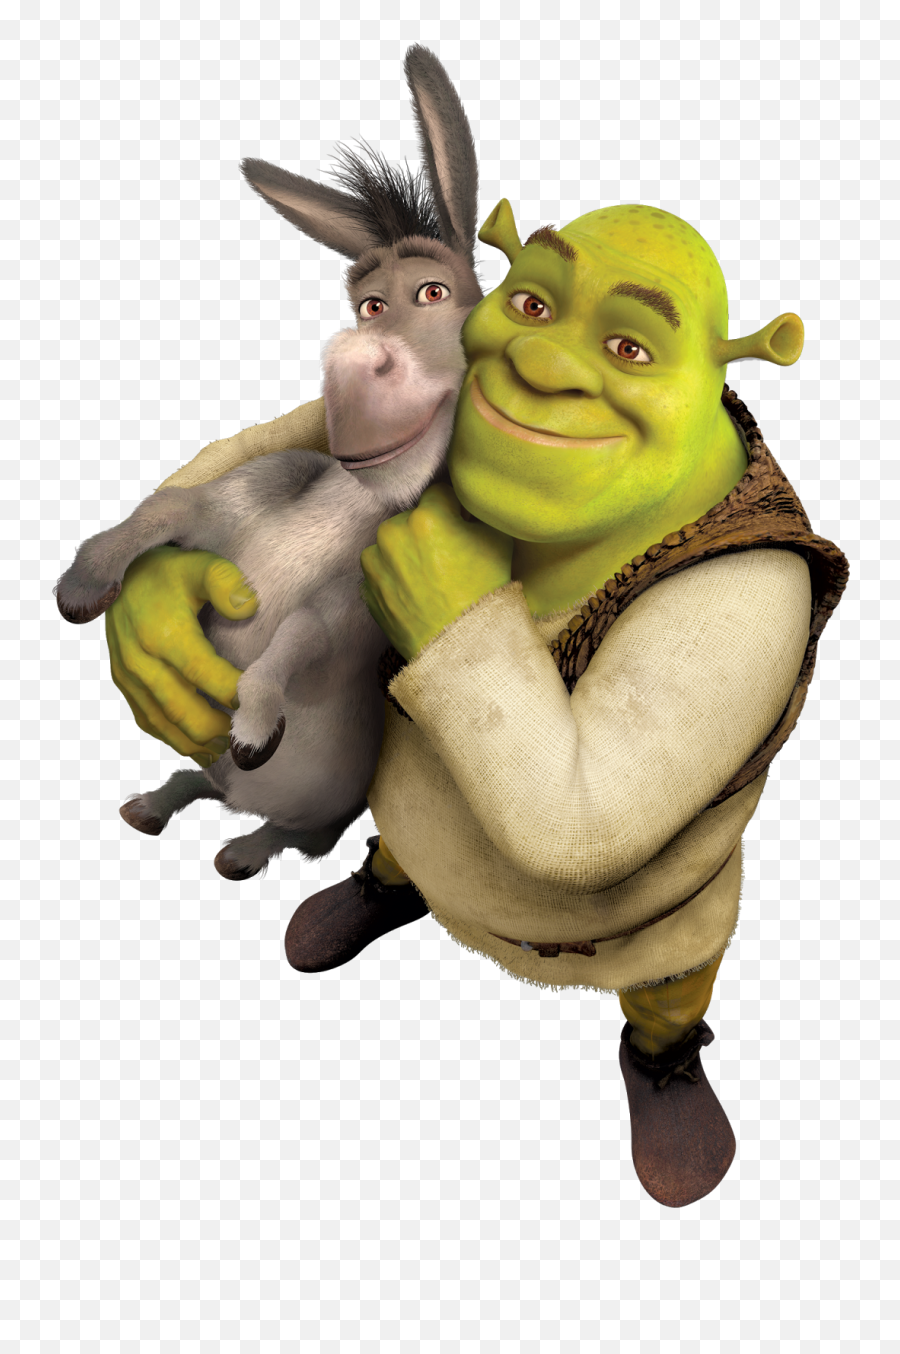 Download Shrek Donkey Png Image For Free - Shrek And Donkey Hug,Donkey Shrek Png